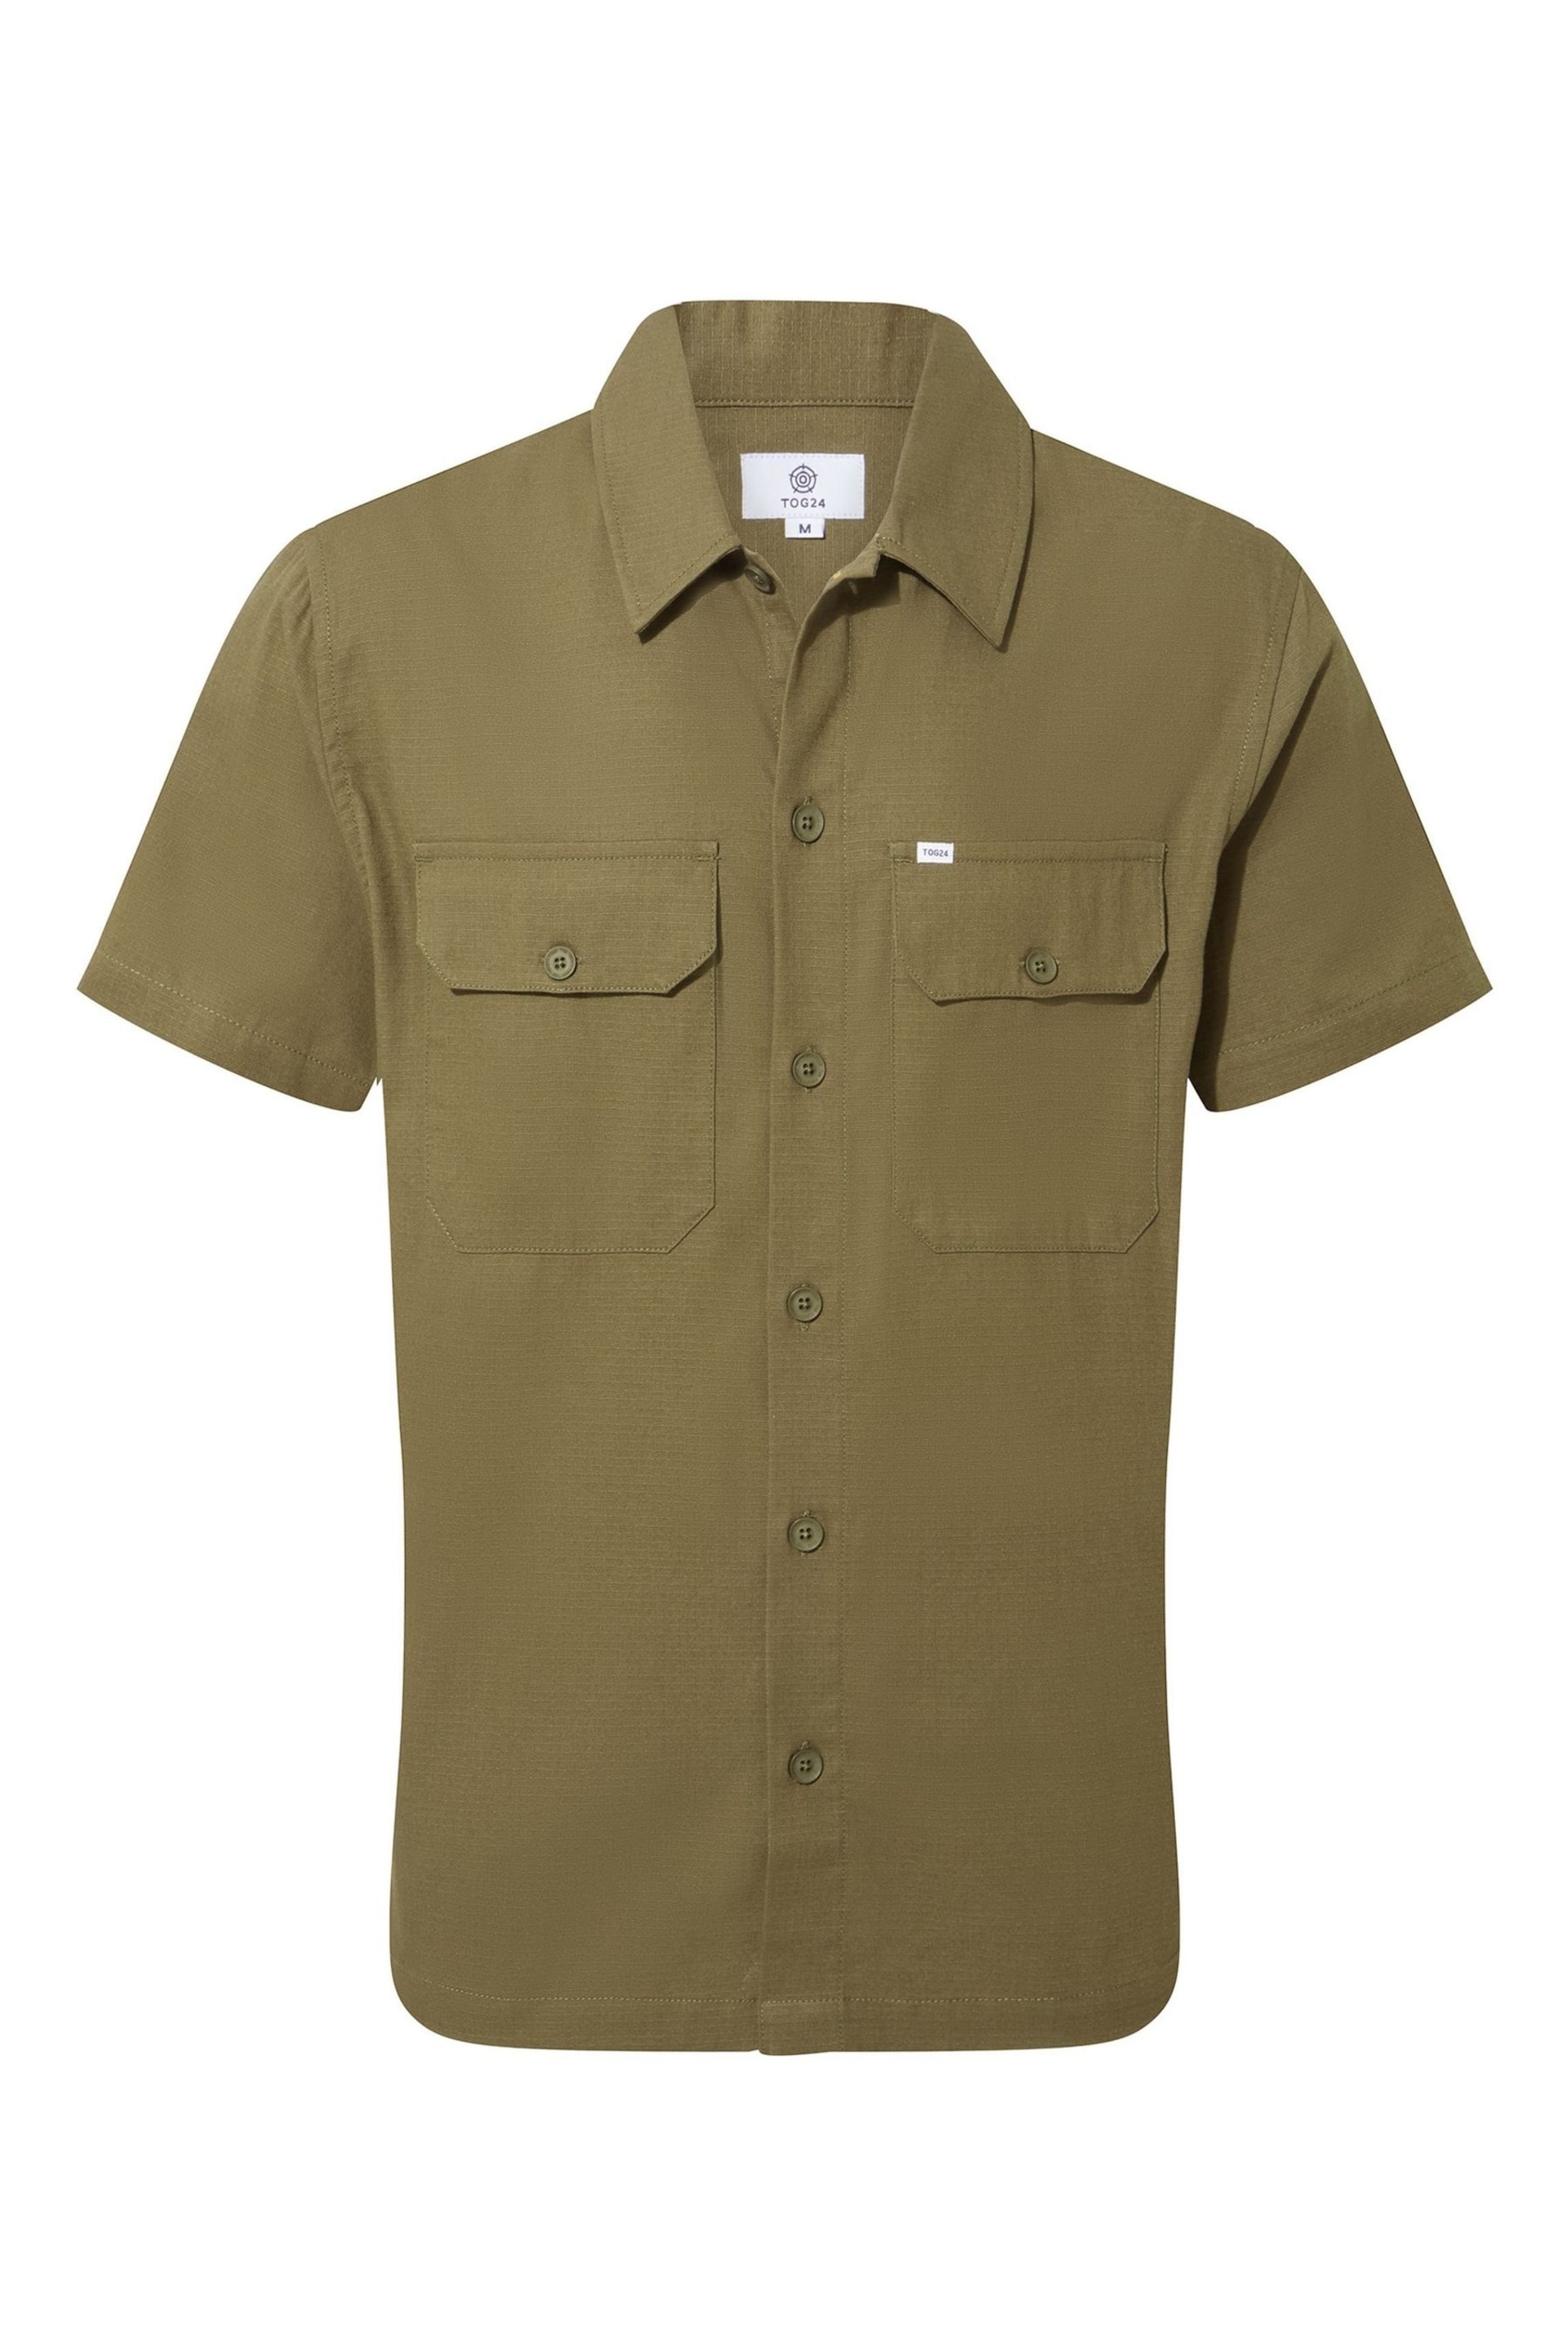 Tog 24 Green Cody Short Sleeve Shirt - Image 5 of 5